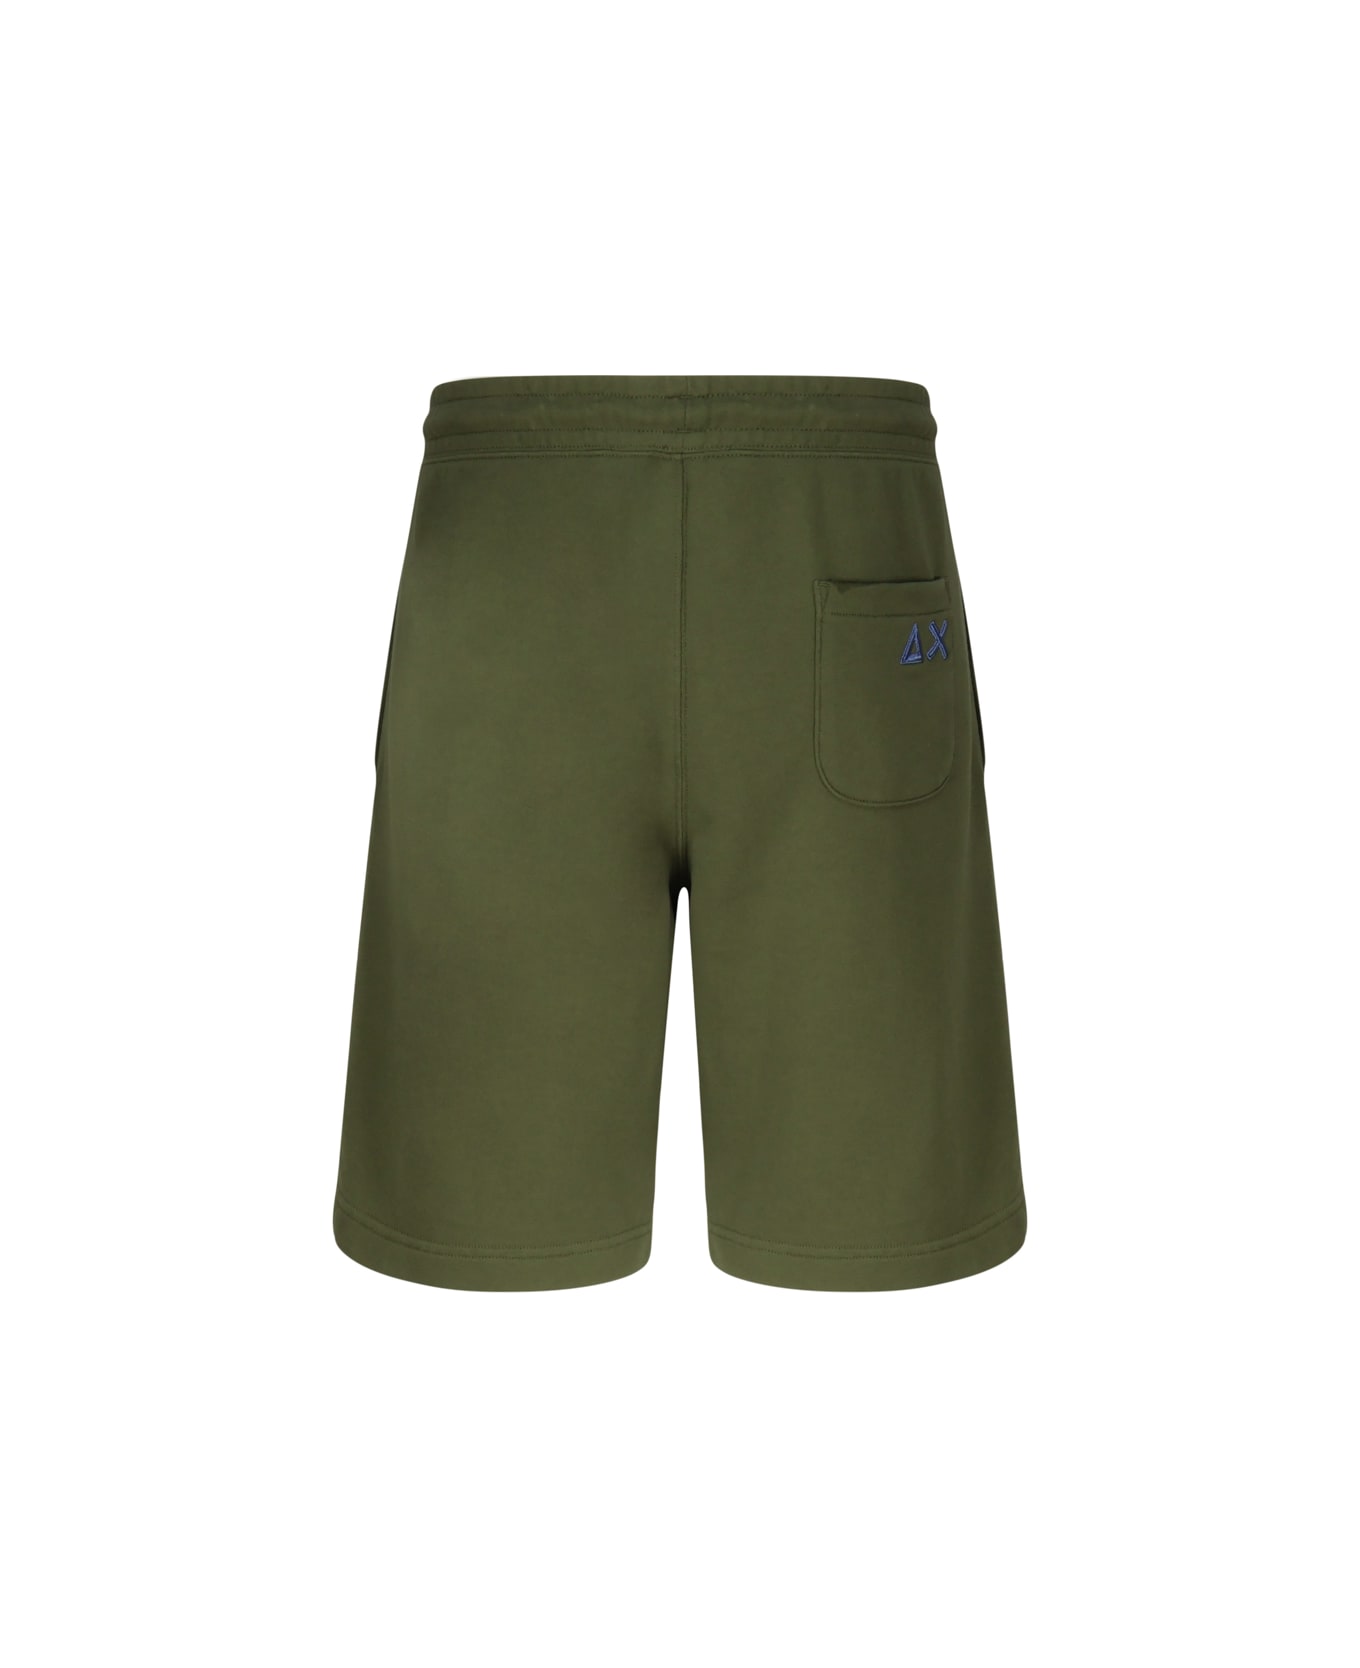 Sun 68 Bermuda Sweatpants - Military green ショートパンツ